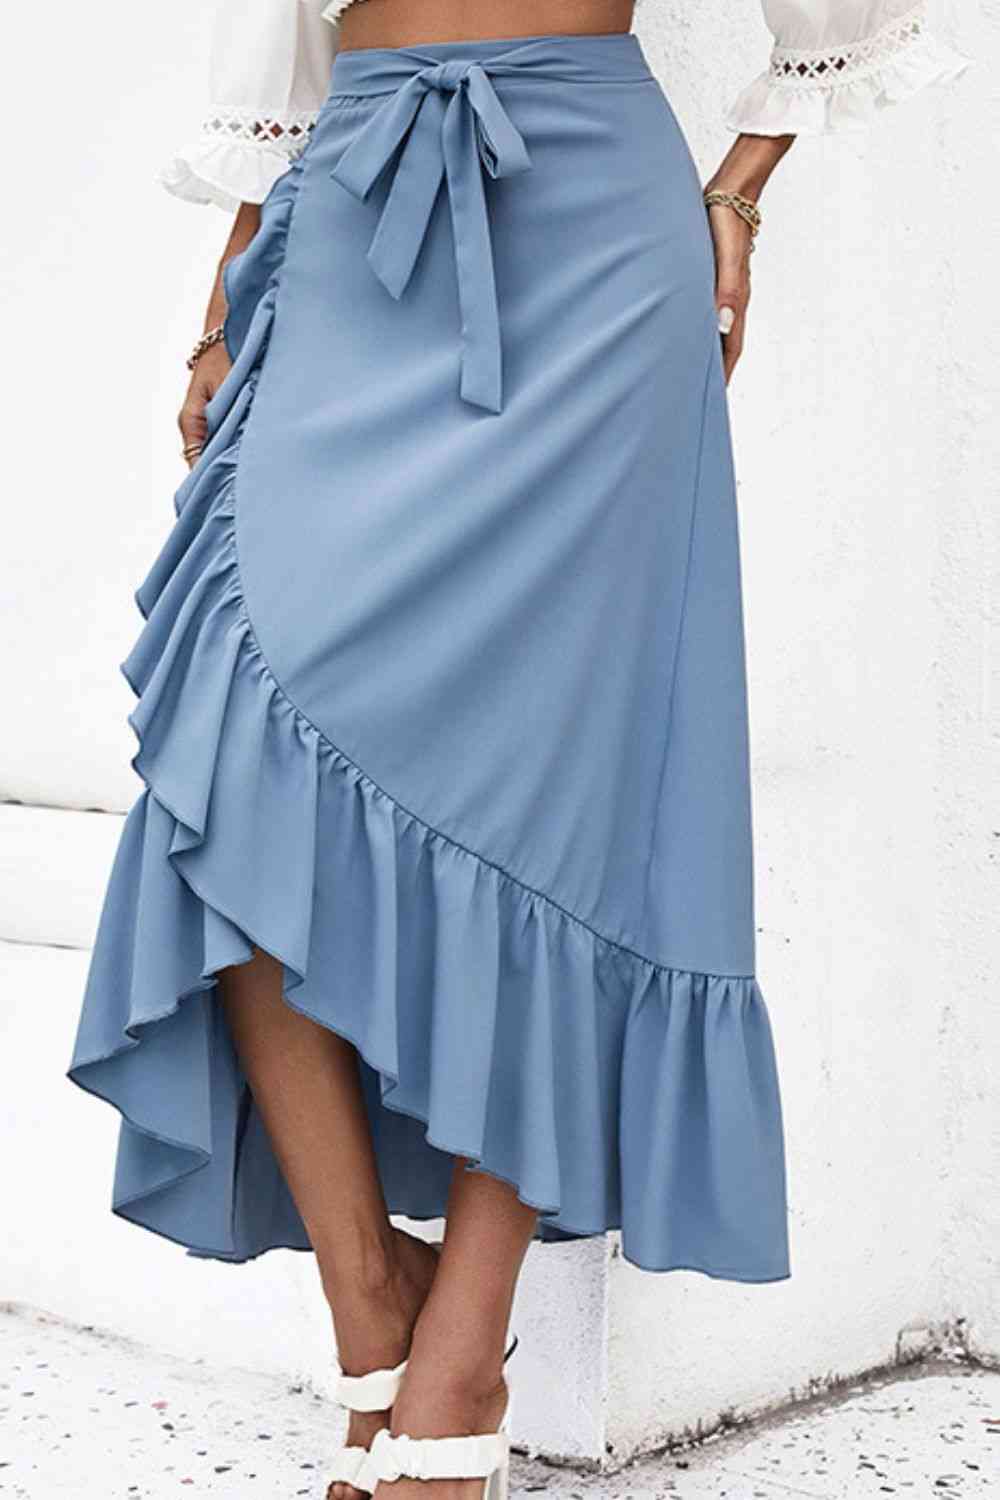 TEEK - Blue Ruffle Trim Tied Skirt SKIRT TEEK Trend   